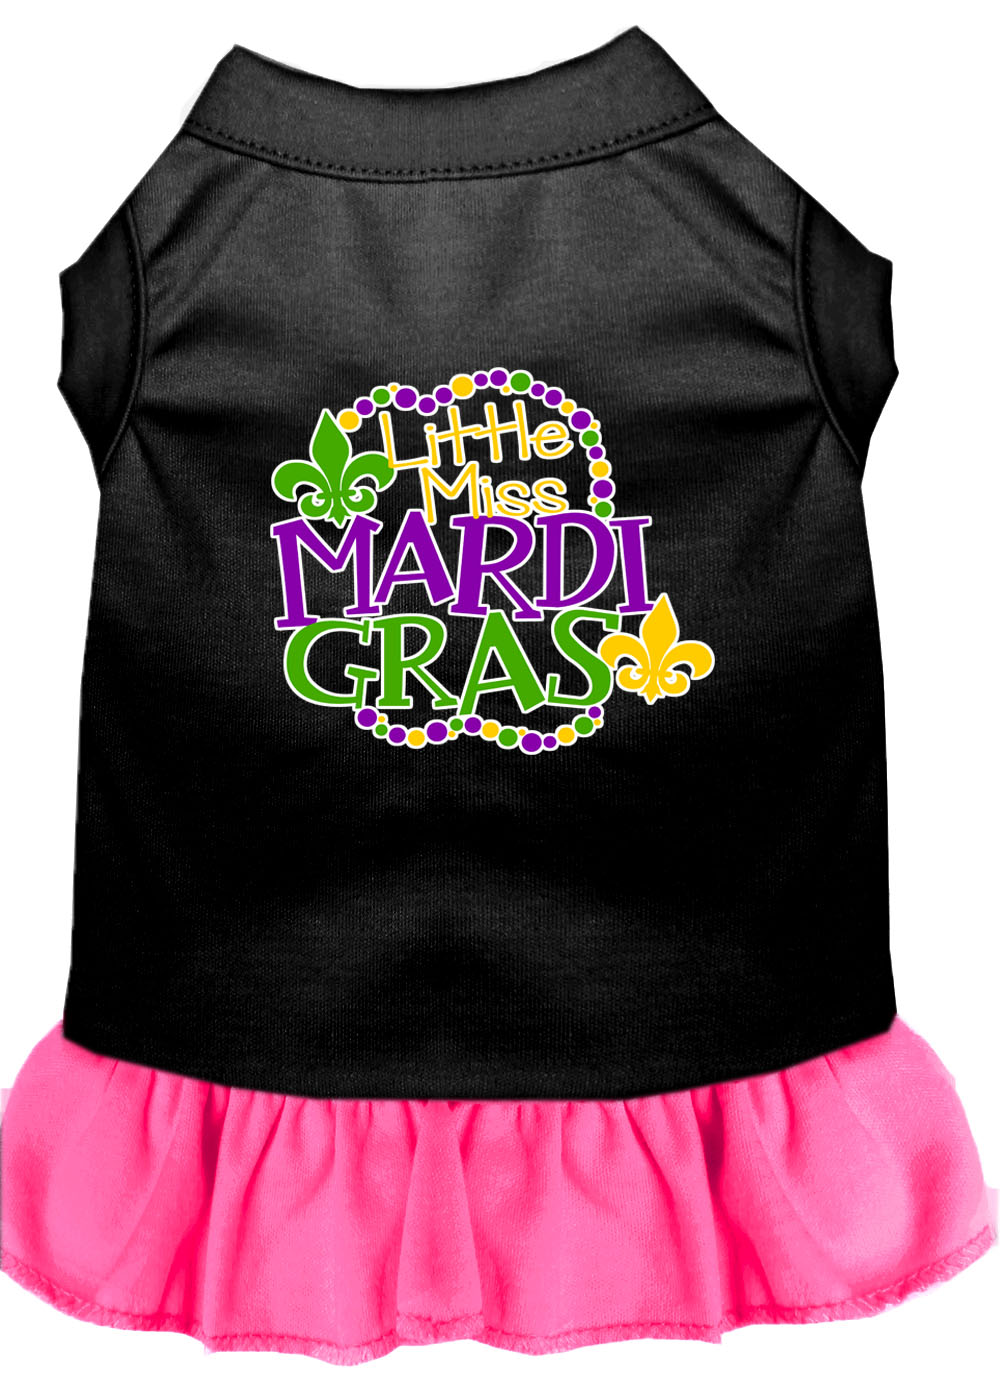 Miss Mardi Gras Screen Print Mardi Gras Dog Dress Black with Bright Pink Med